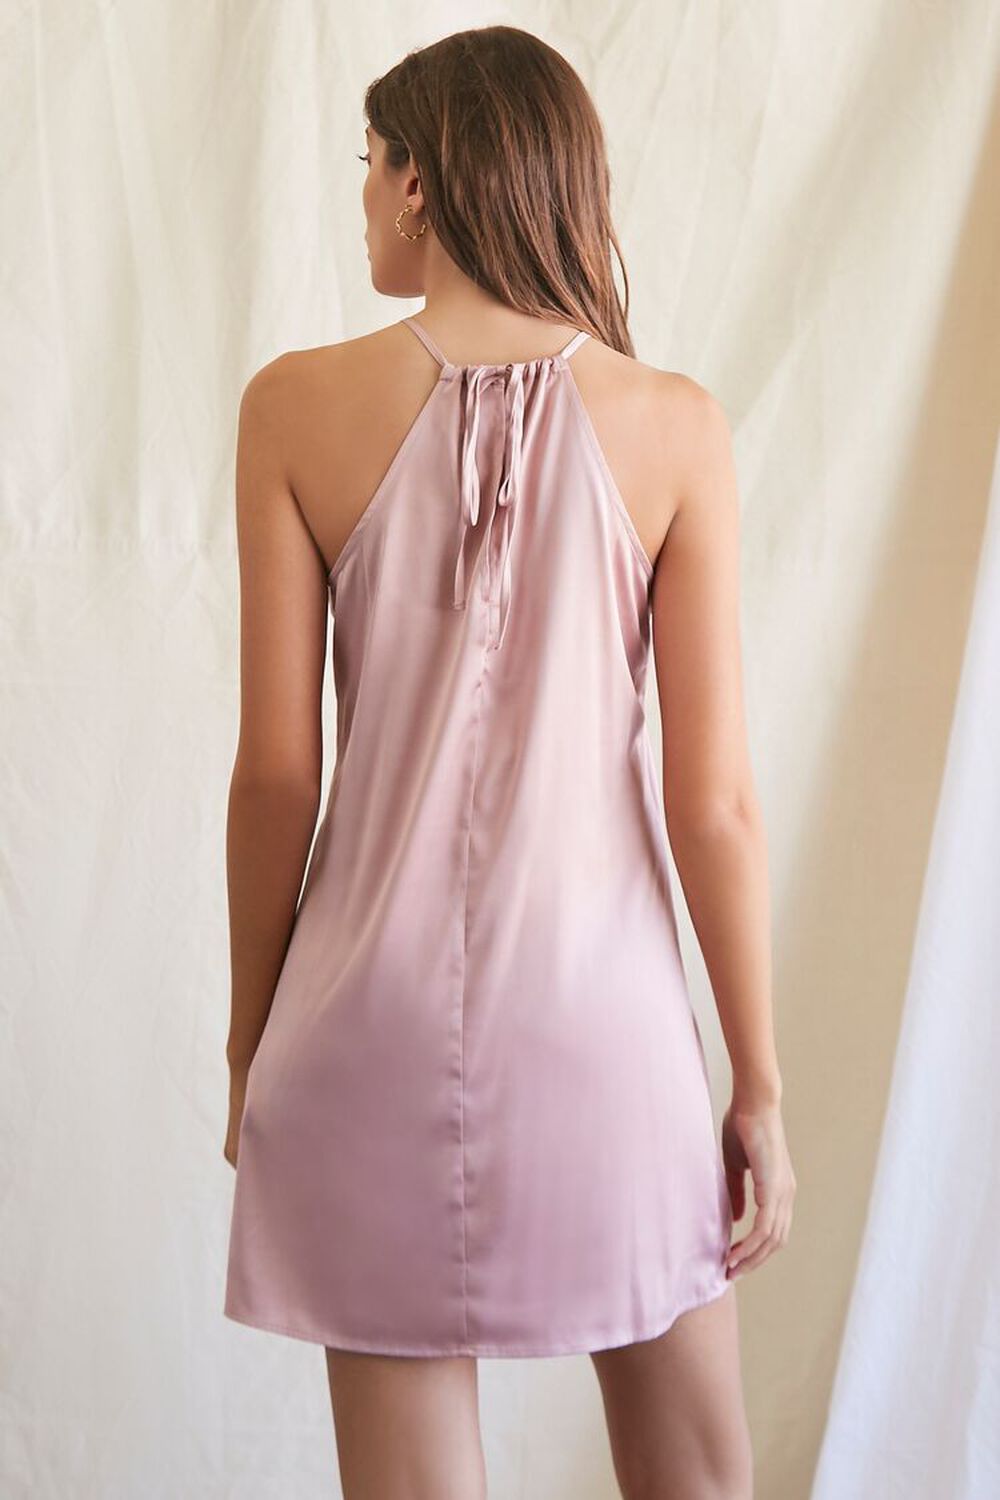 ROSE Satin Mini Cami Dress, image 3